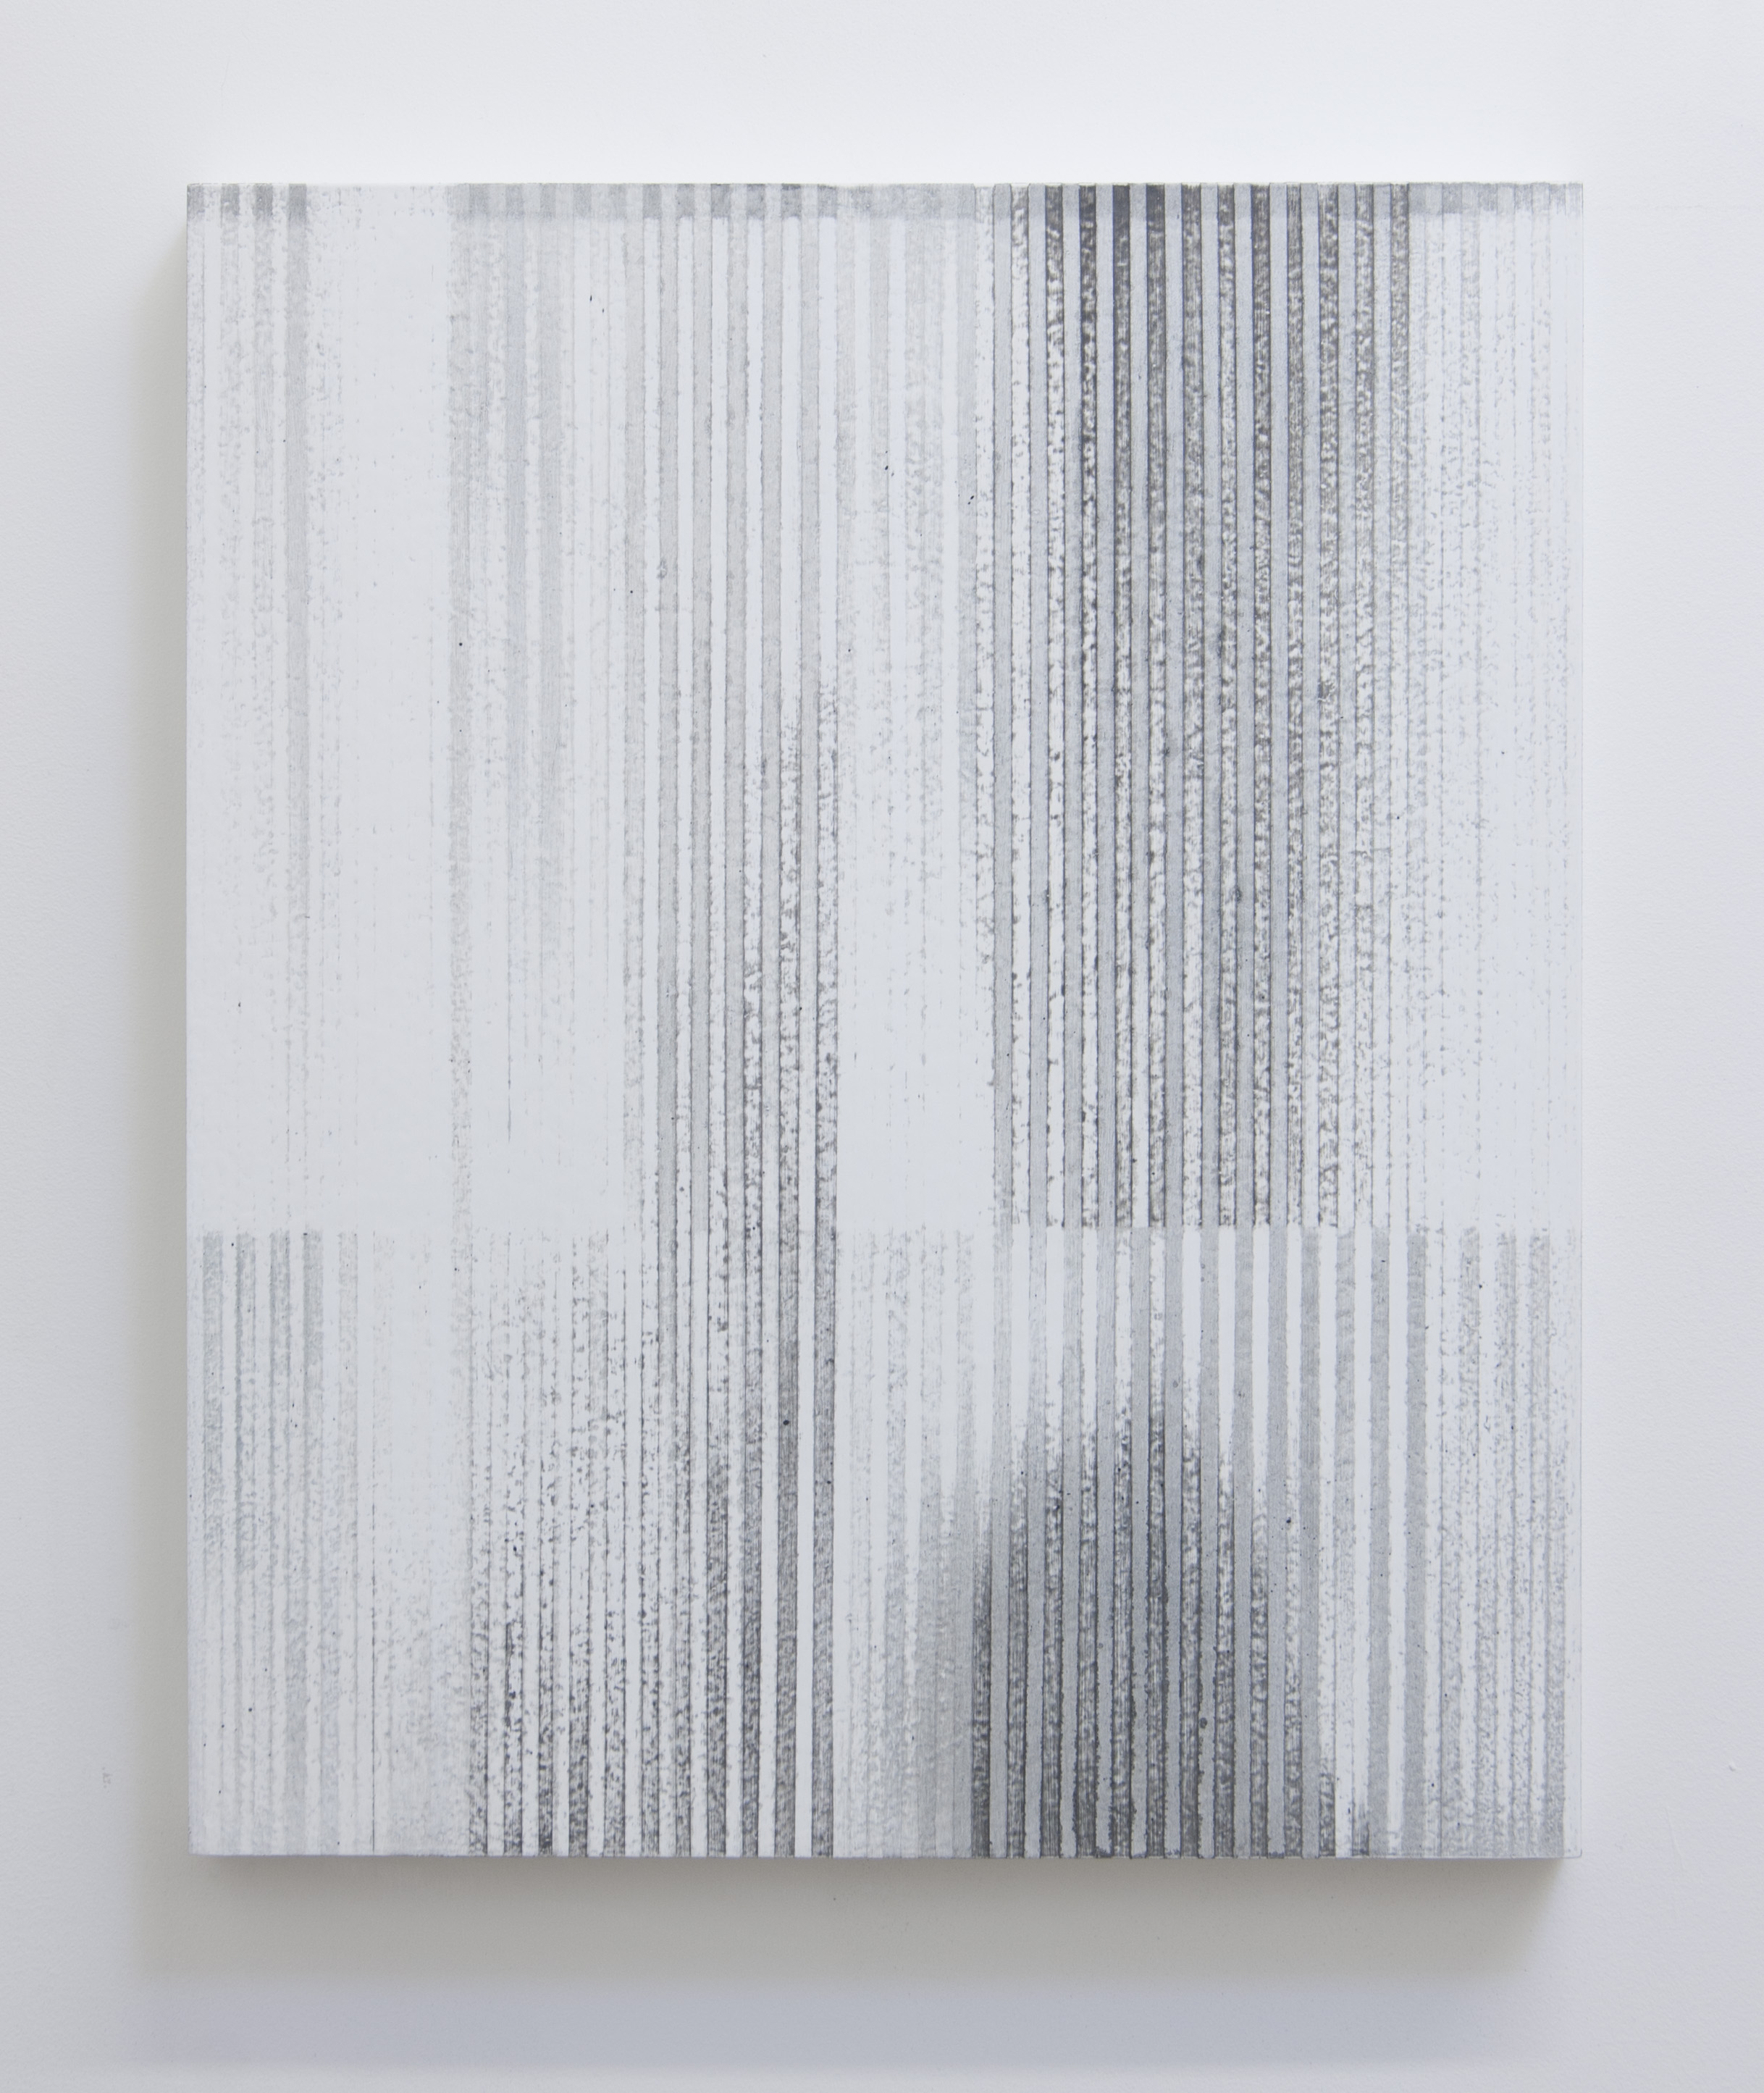  Bloodless Language I, 2014  Acrylic on panel, 24 x 20 inches 